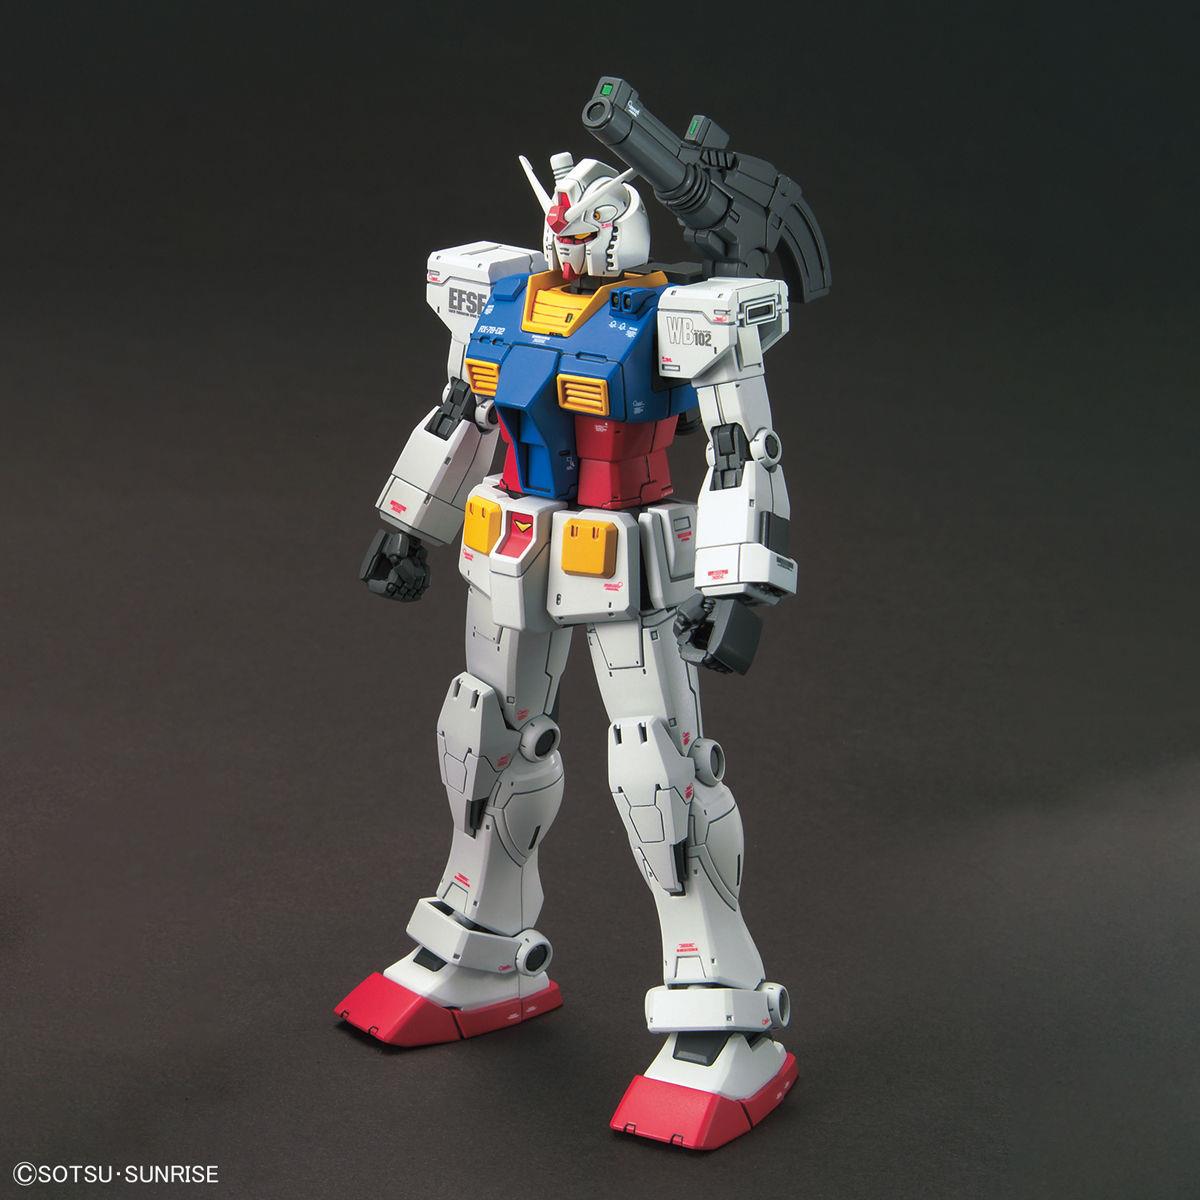 Gundam: RX-78-02 Gundam (Gundam the Origin ver.) HG Model